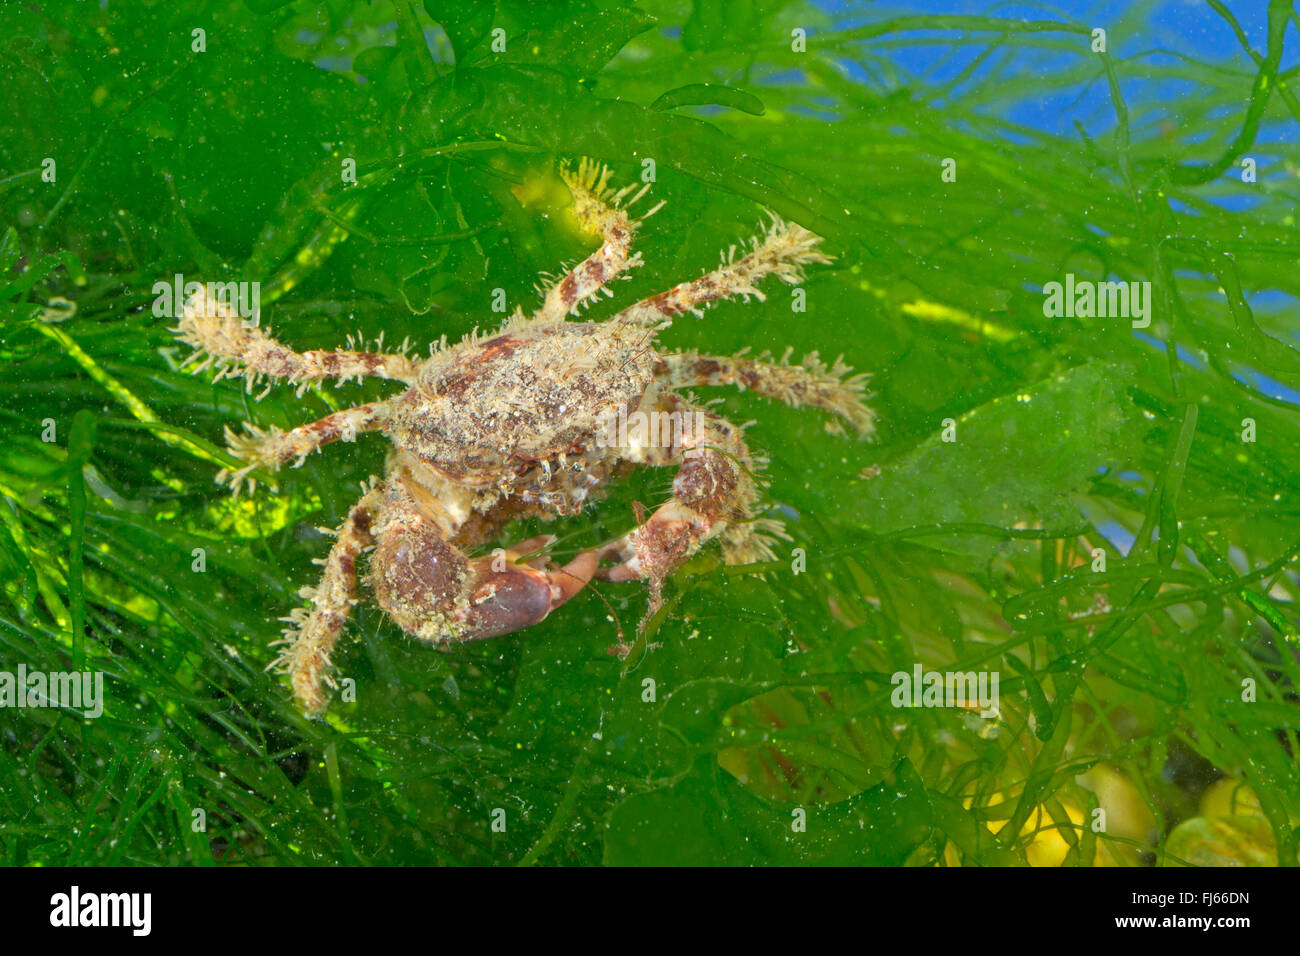 bristly crab, hairy crab, hairy black crab, bristly xanthid  (Pilumnus hirtellus), on a water plant Stock Photo